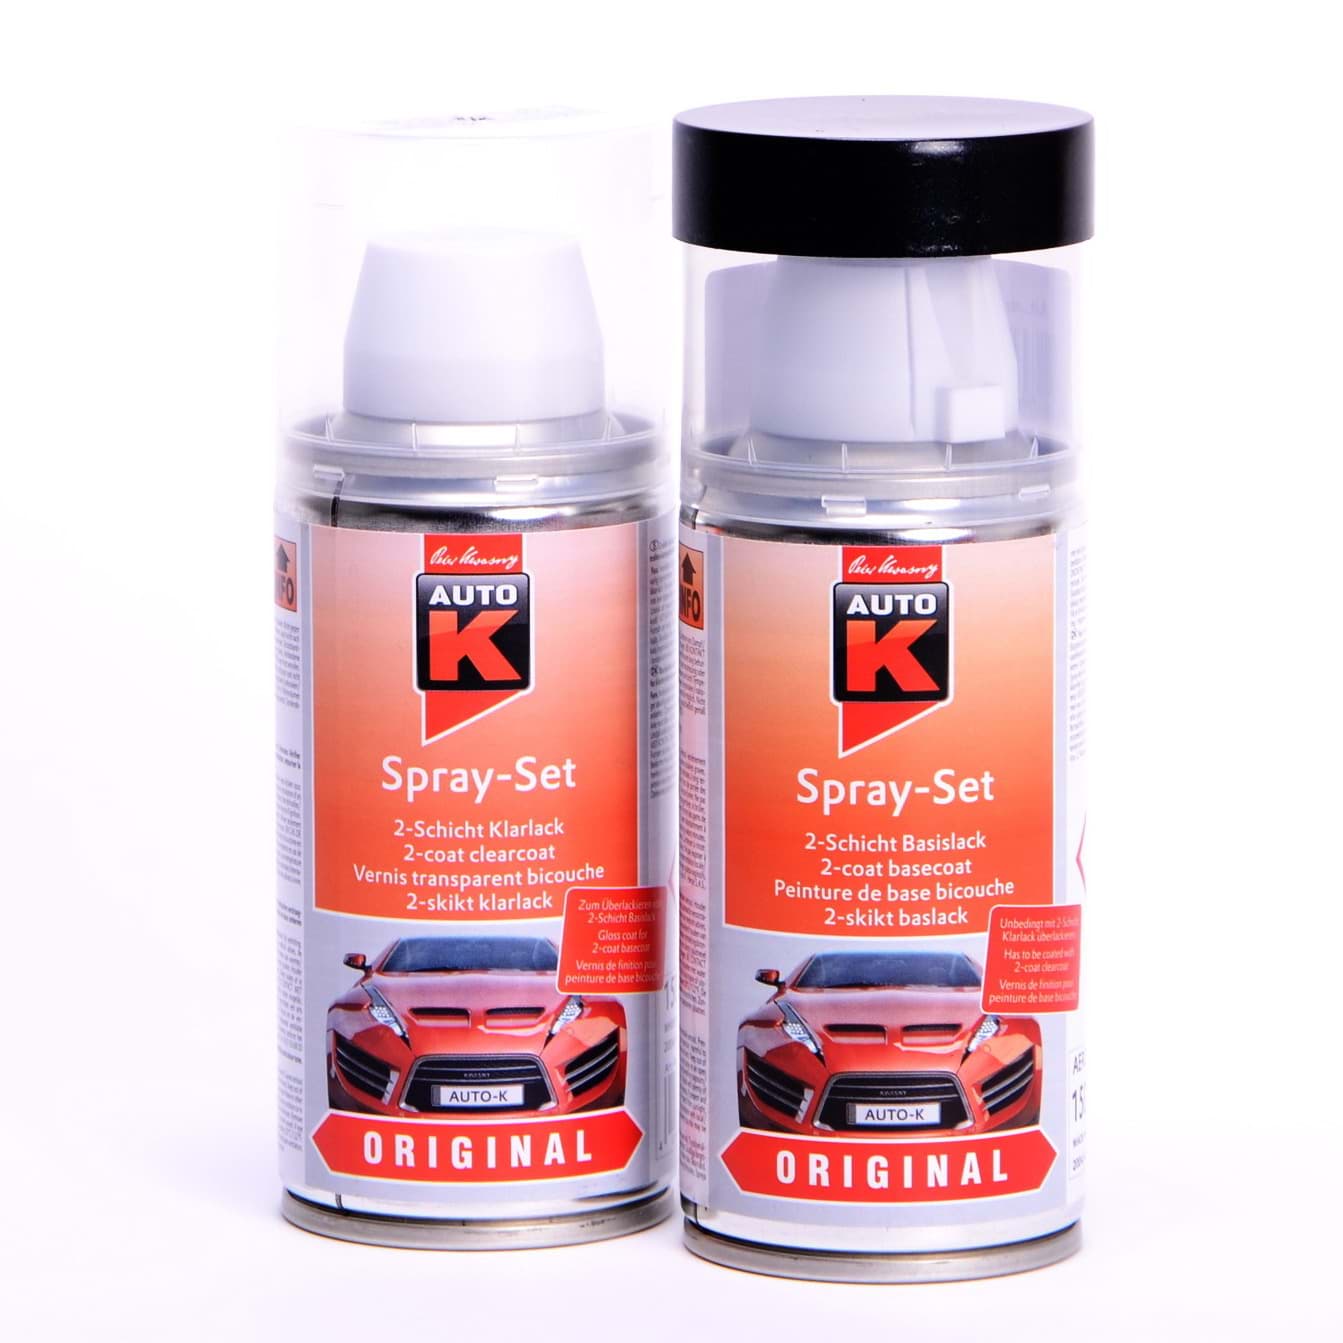 Afbeelding van Auto-K Spray-Set Autolack für Fiat 426 Midnight blau met 24666